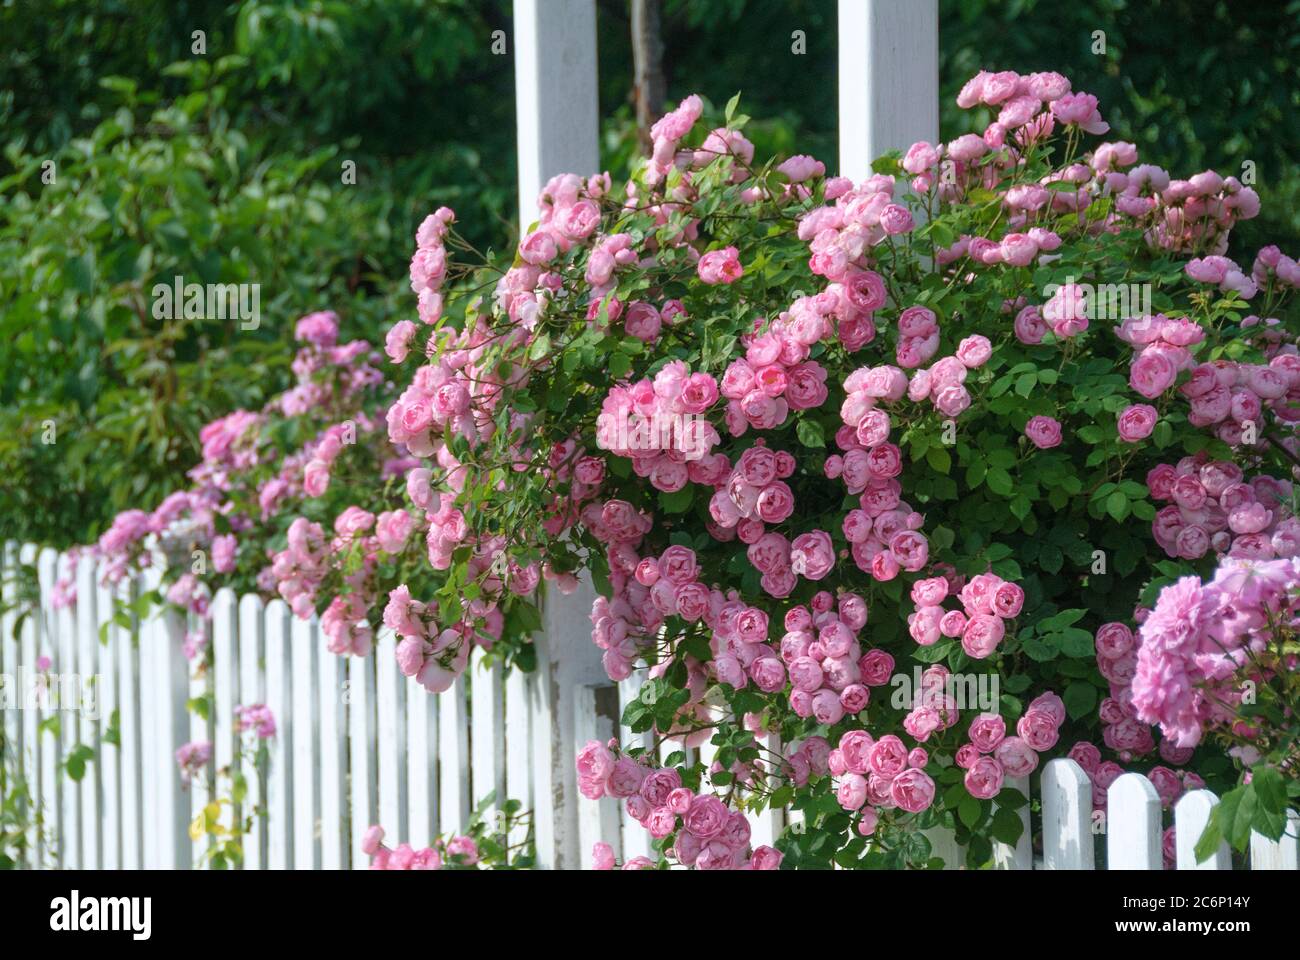 Rambler-Rose Rosa Raubritter, Rambler Rose Pink Raubritter Stock Photo